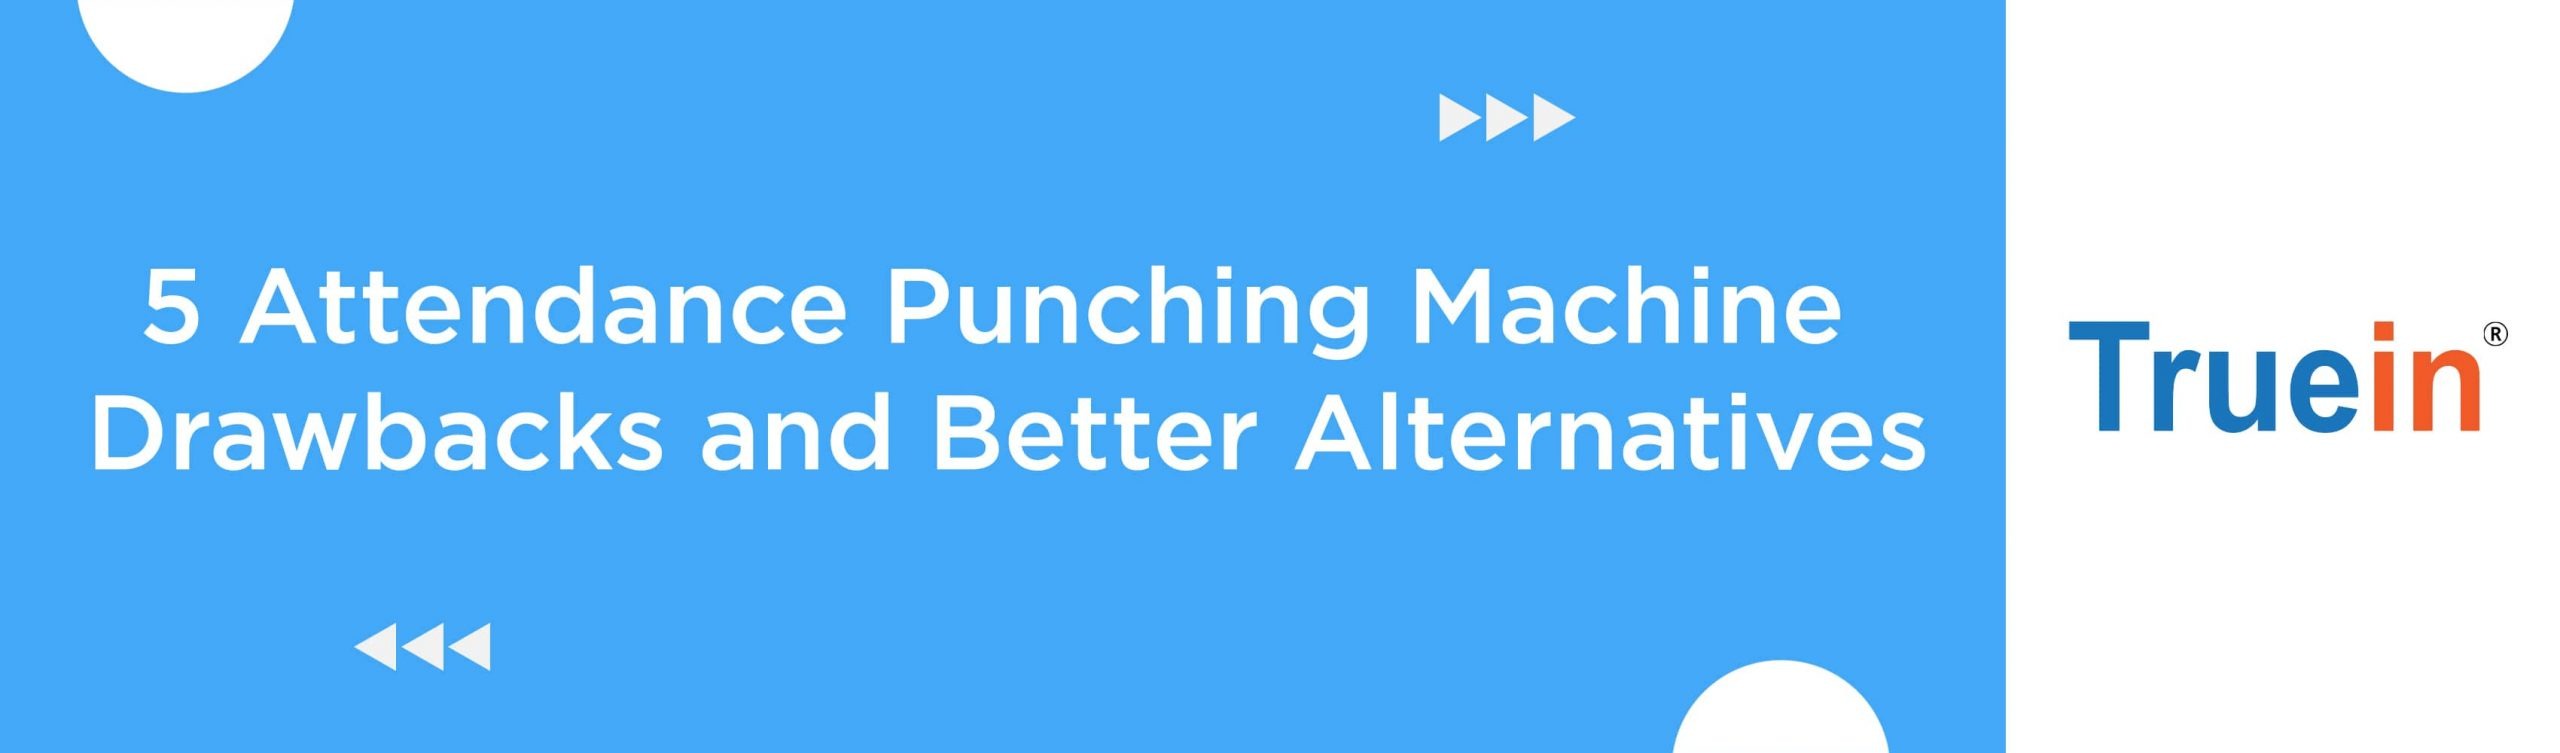 5 Attendance Punching Machine Drawbacks and Better Alternatives